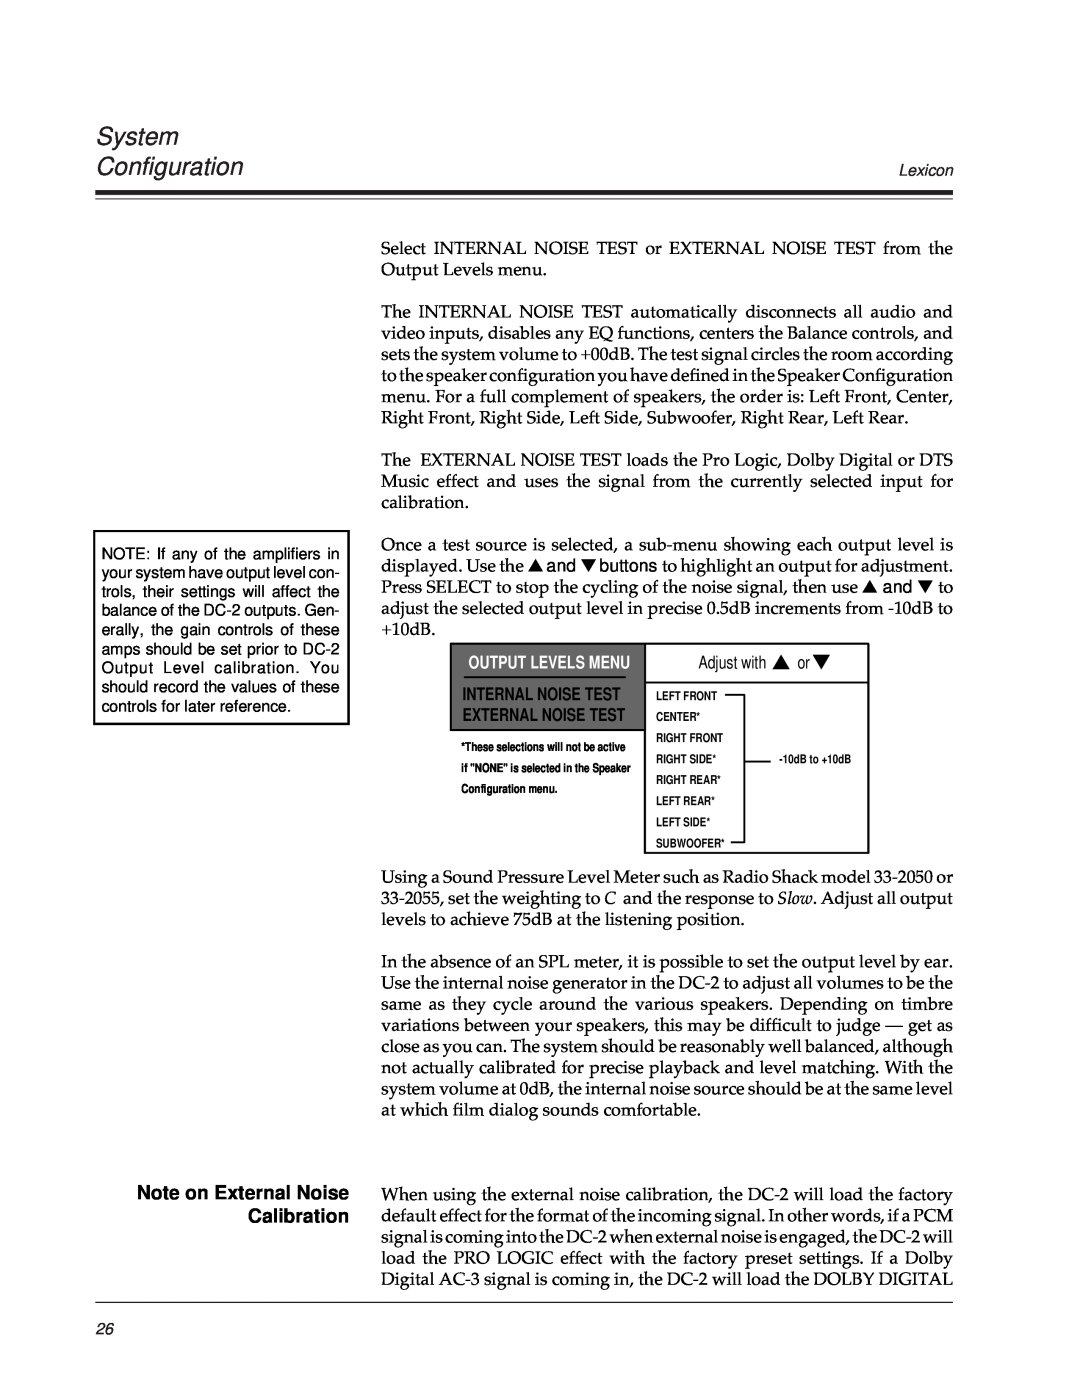 Lexicon DC-2 owner manual Note on External Noise Calibration, System Configuration, Output Levels Menu 